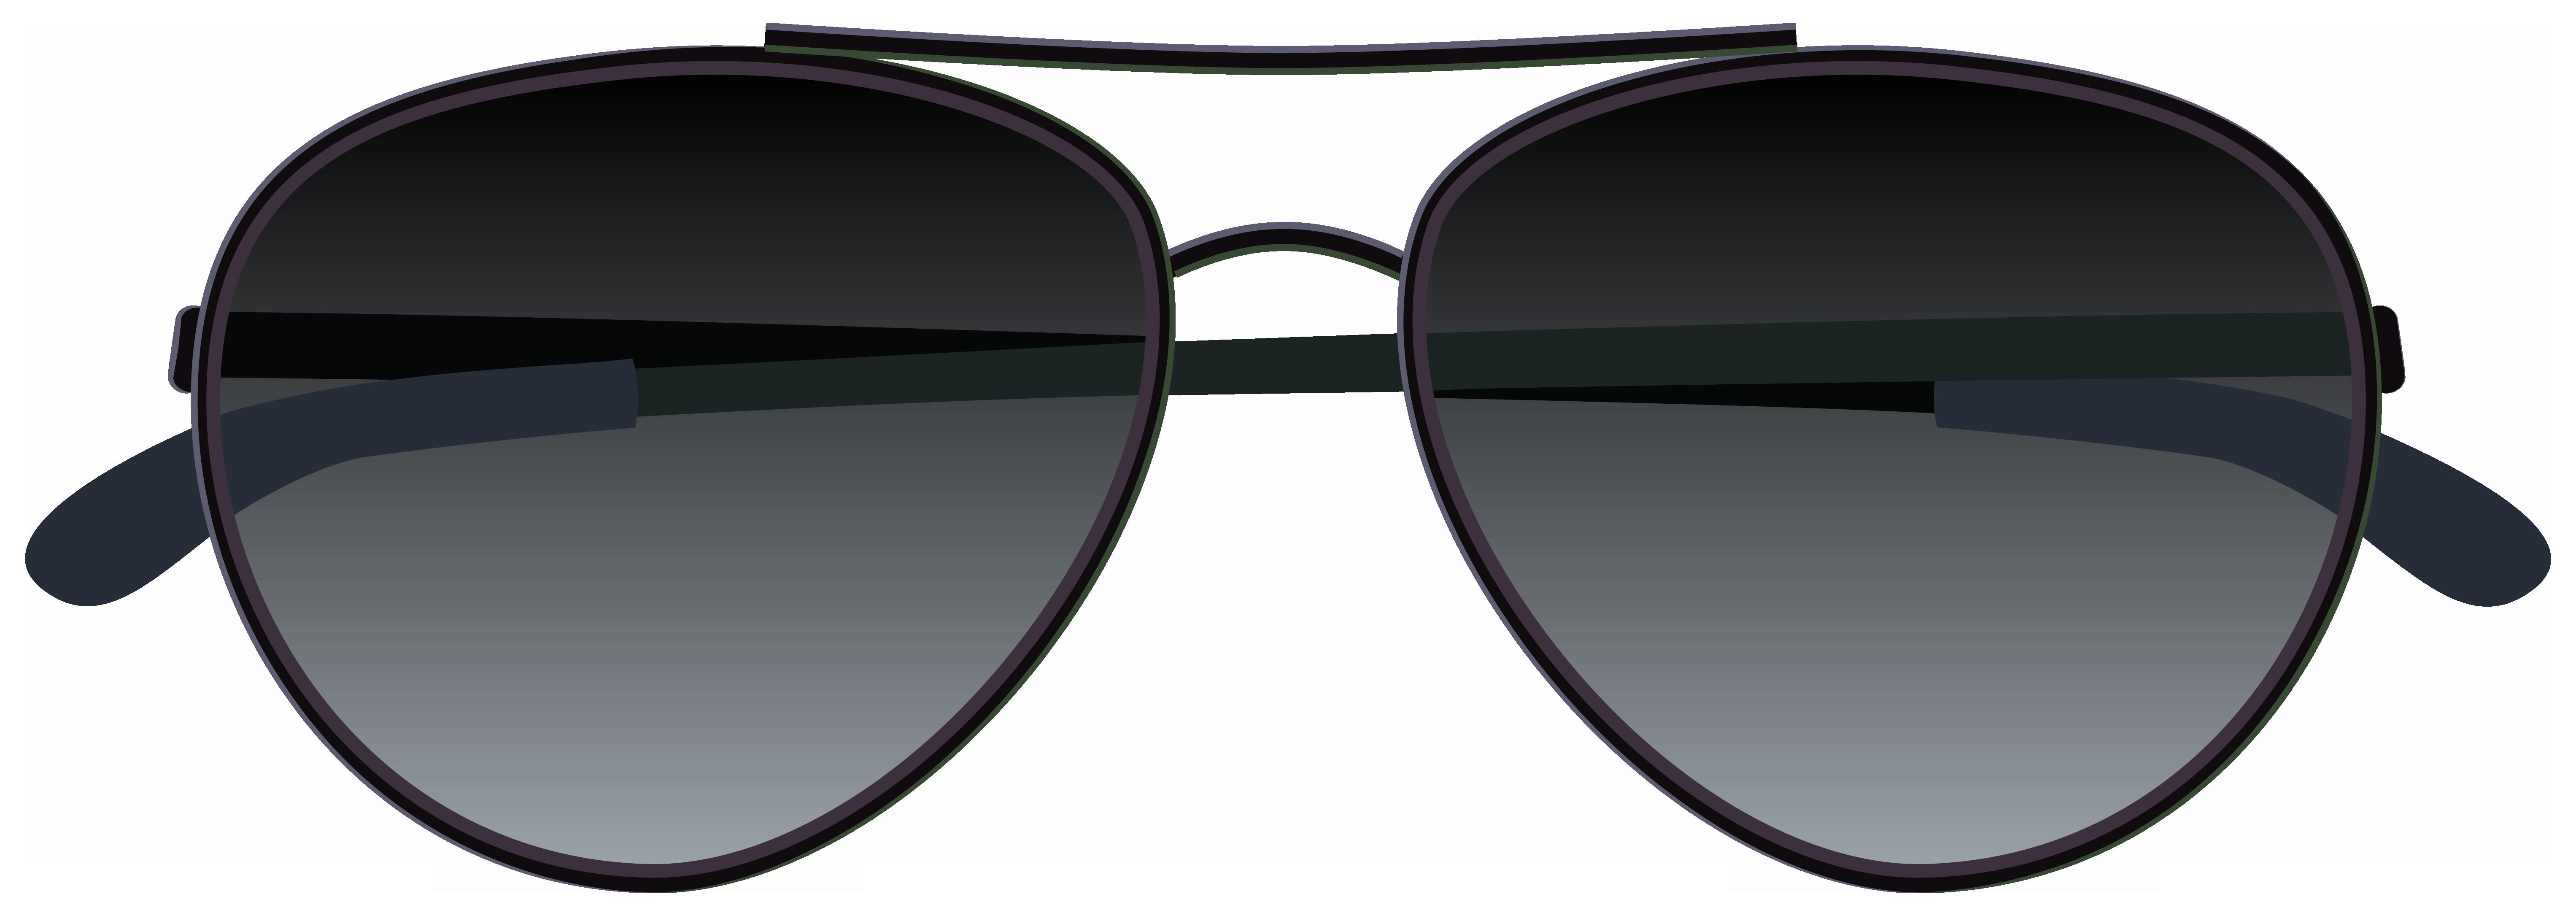 Download Sunglasses Transparent Background HQ PNG Image | FreePNGImg